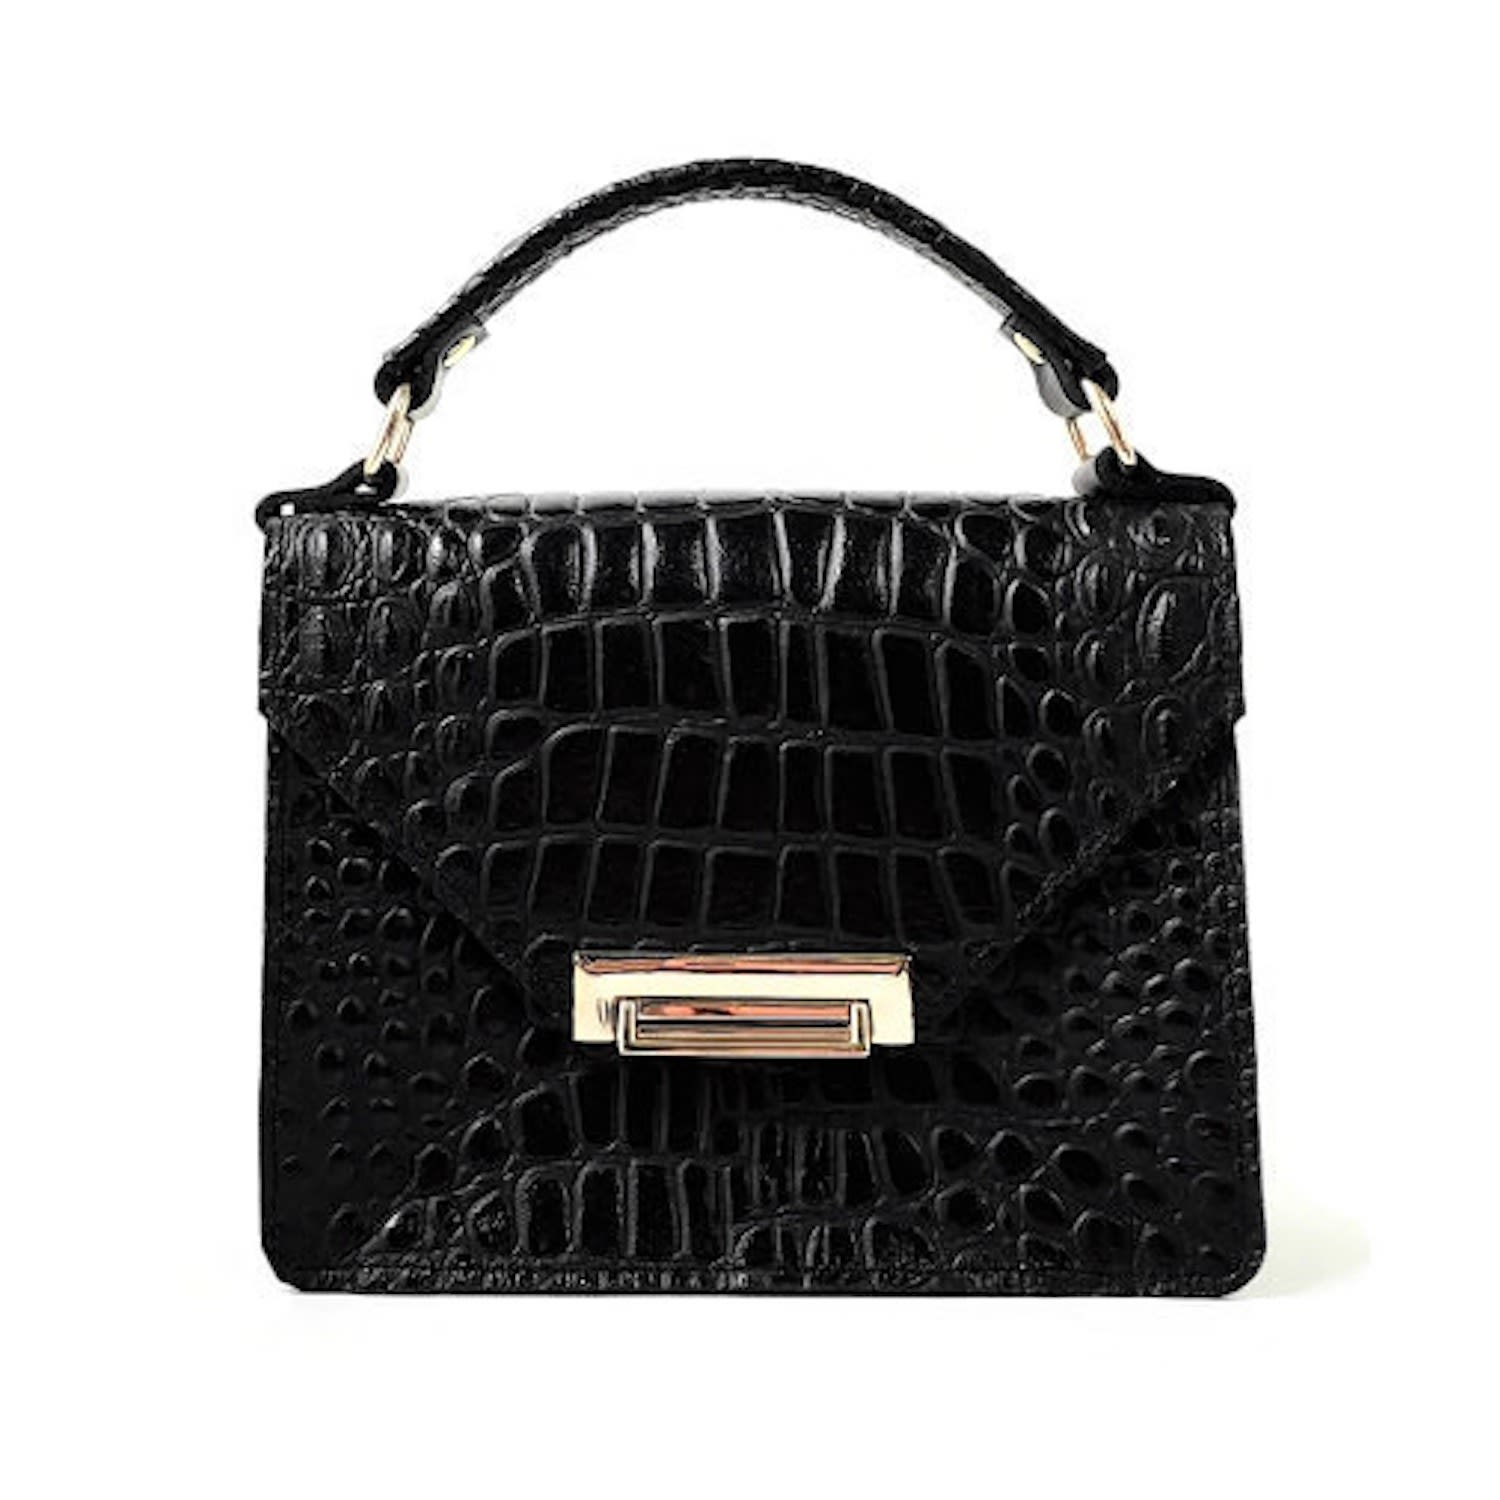 Angela Valentine Handbags - Gavi Mini Bag In Black Crocodile Embossed Leather